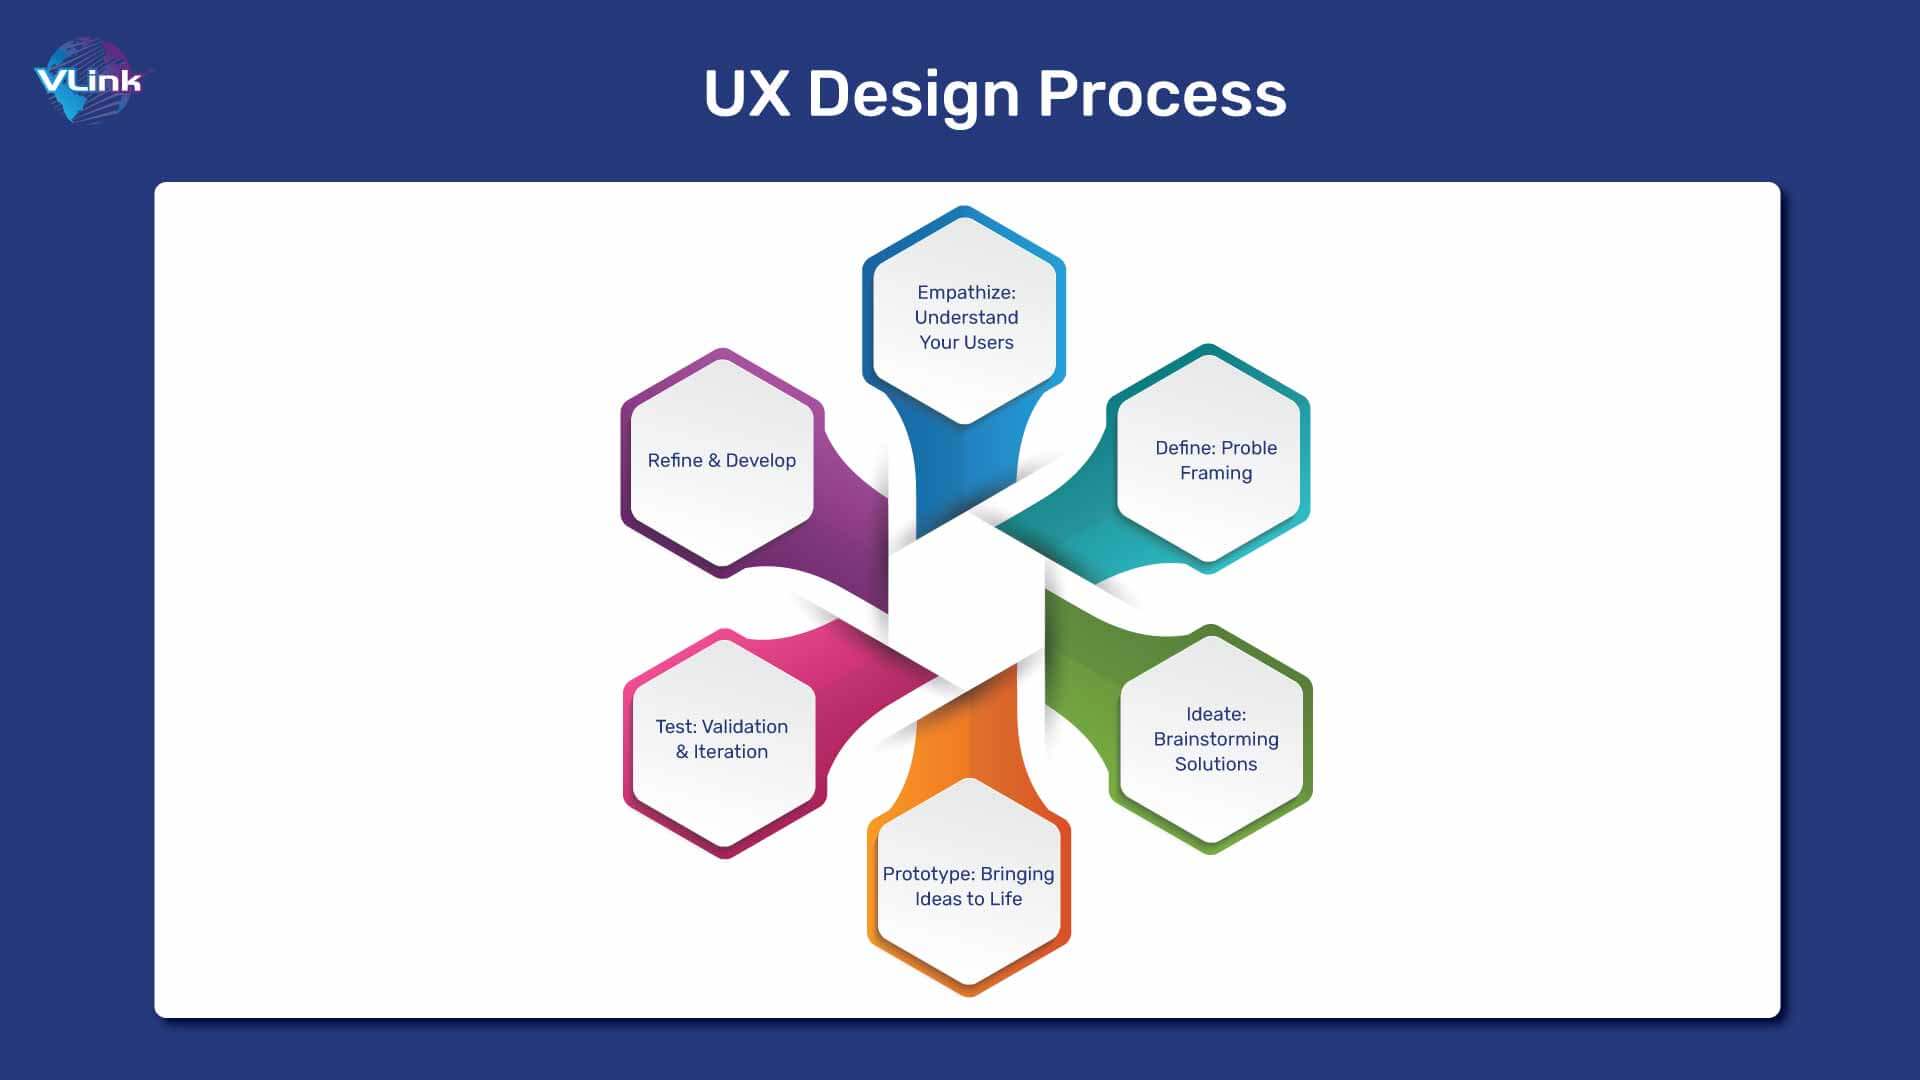 The UX Design Process